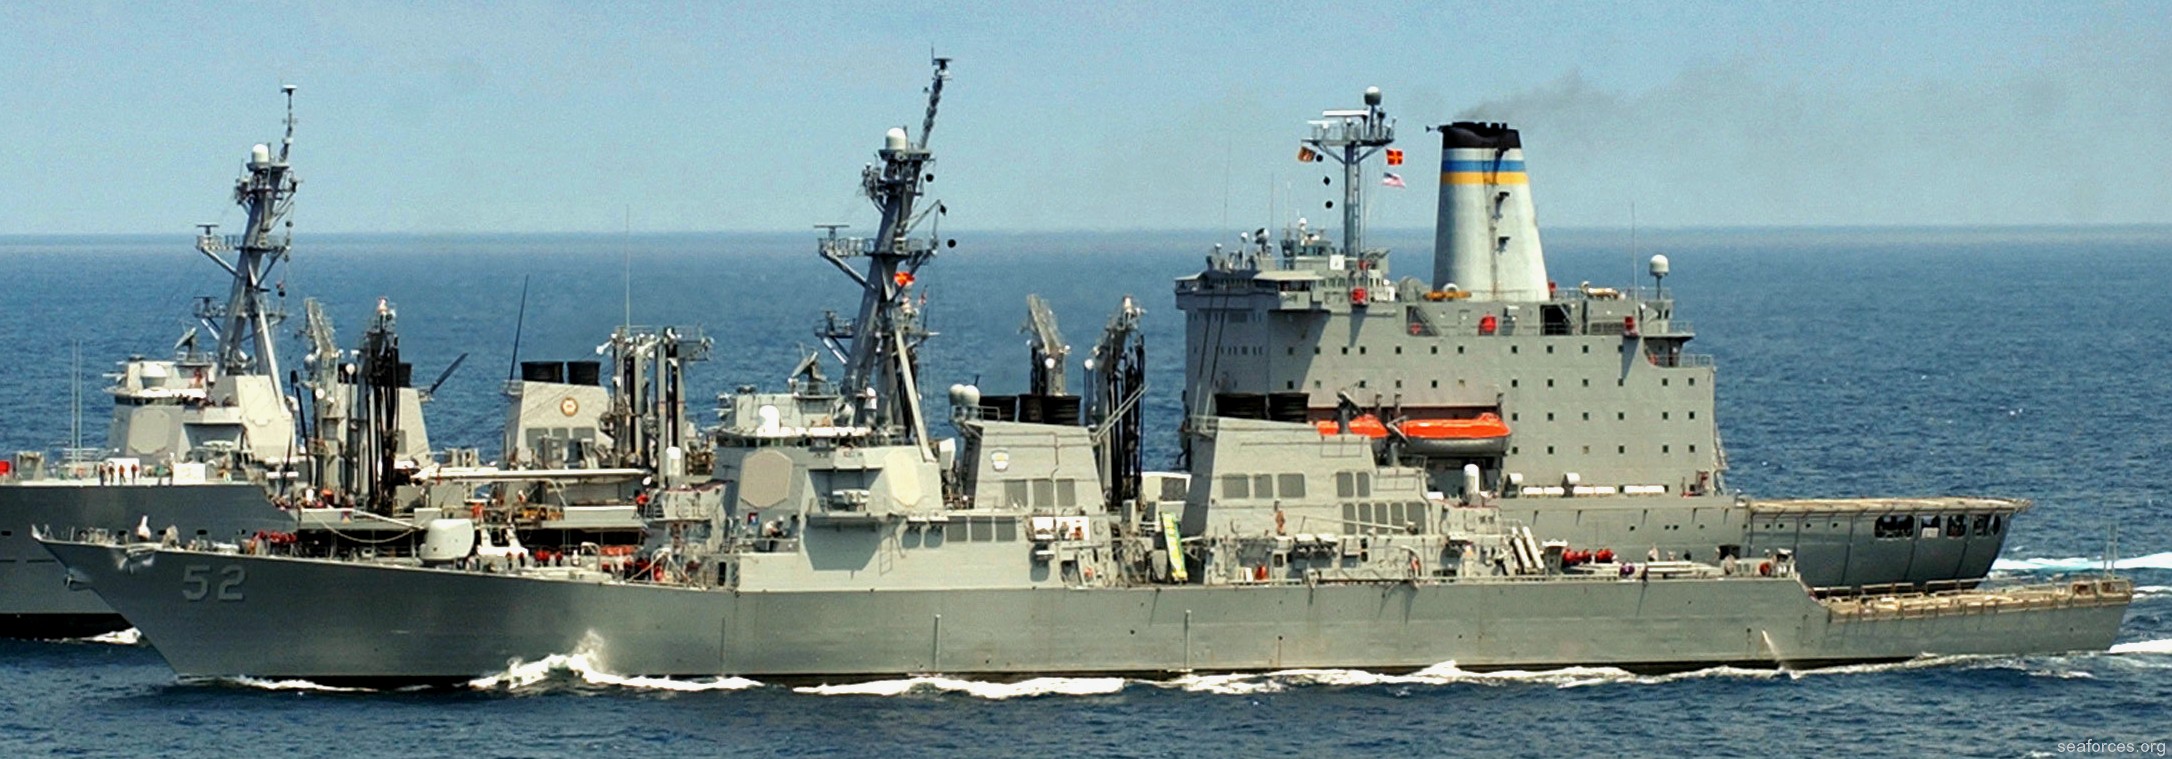 ddg-52 uss barry guided missile destroyer us navy 80